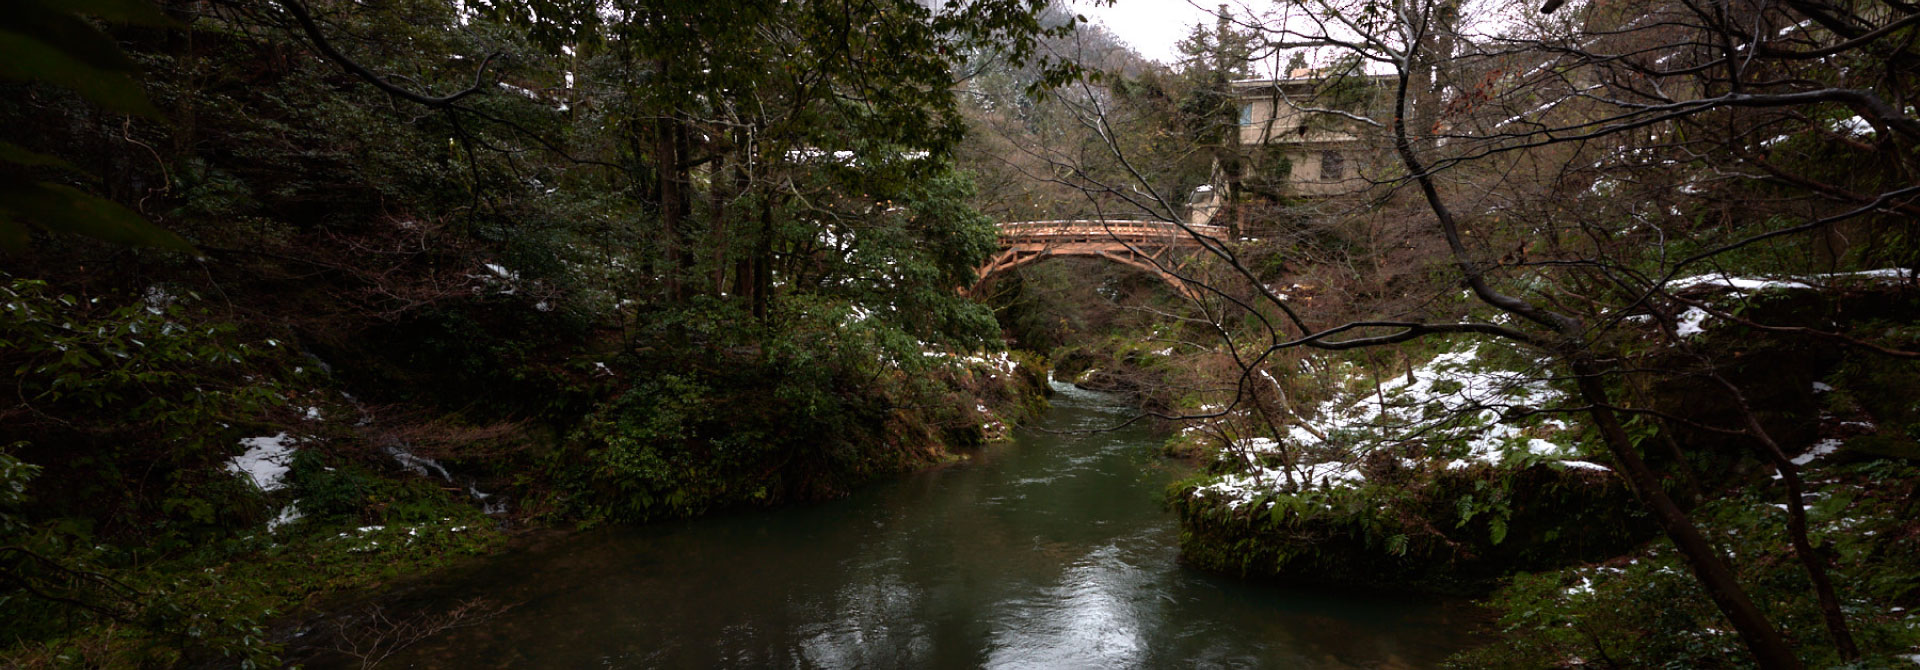 Korogi Bridge in Kakusenkei Gorge